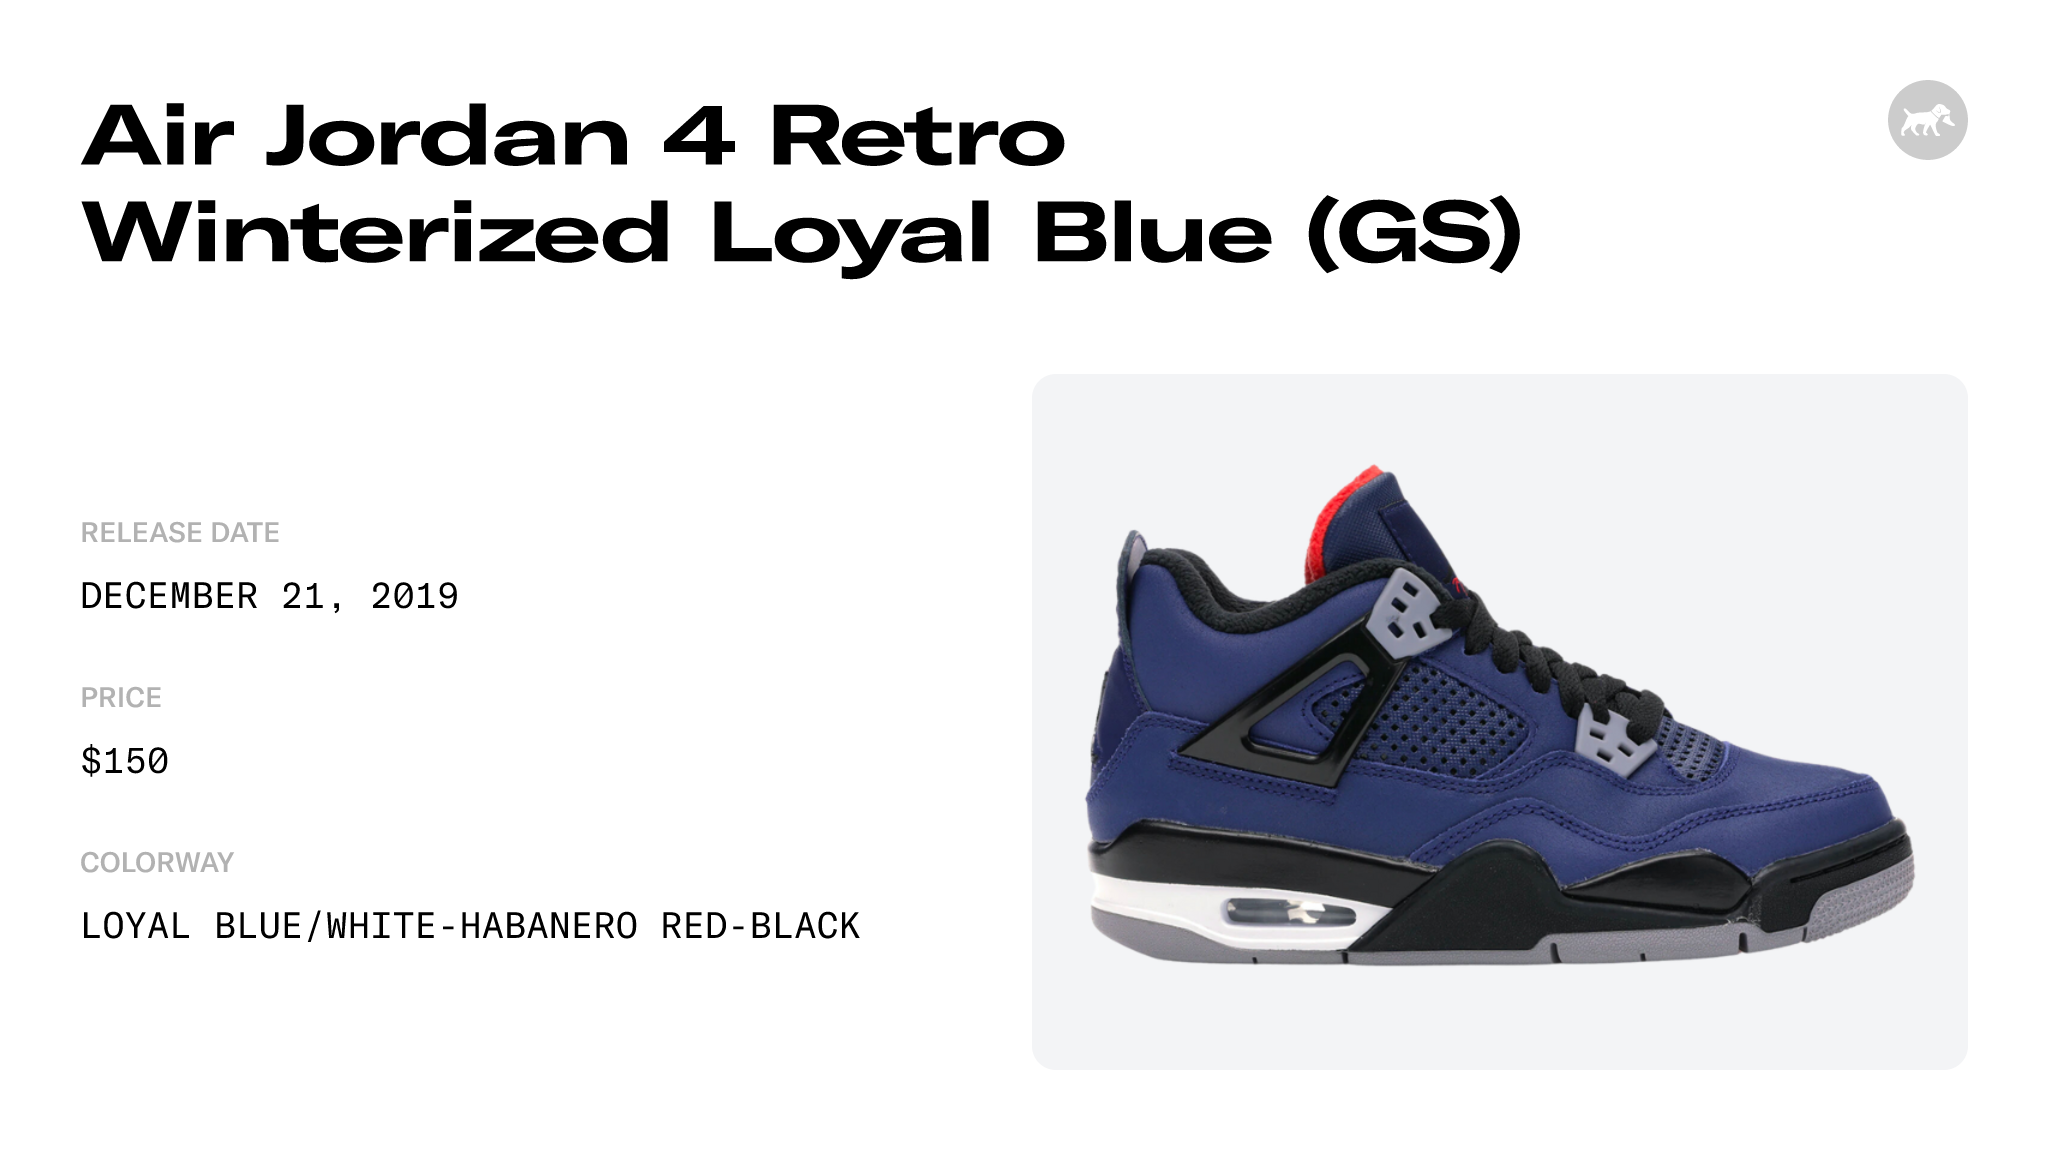 Air Jordan 4 Retro Winterized Loyal Blue (GS) - CQ9745-401 Raffles and  Release Date